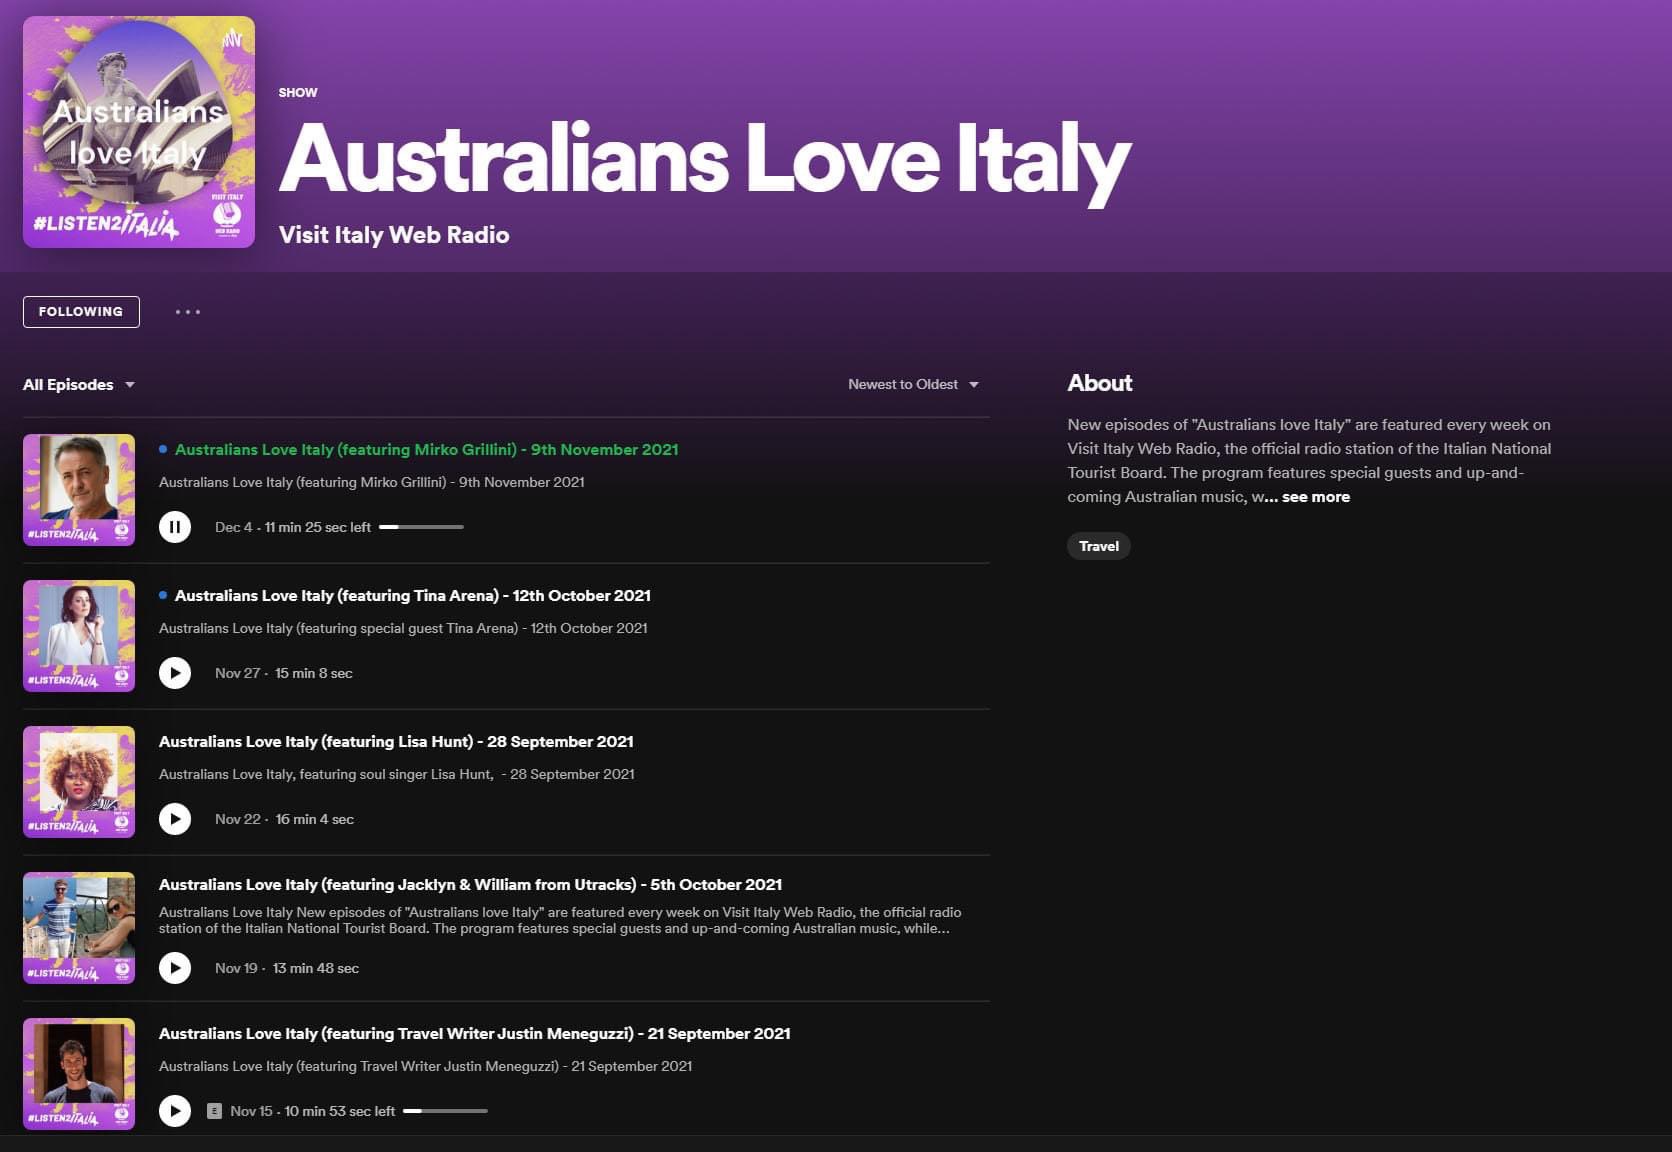 Italy AUS (@italia_aus) / Twitter